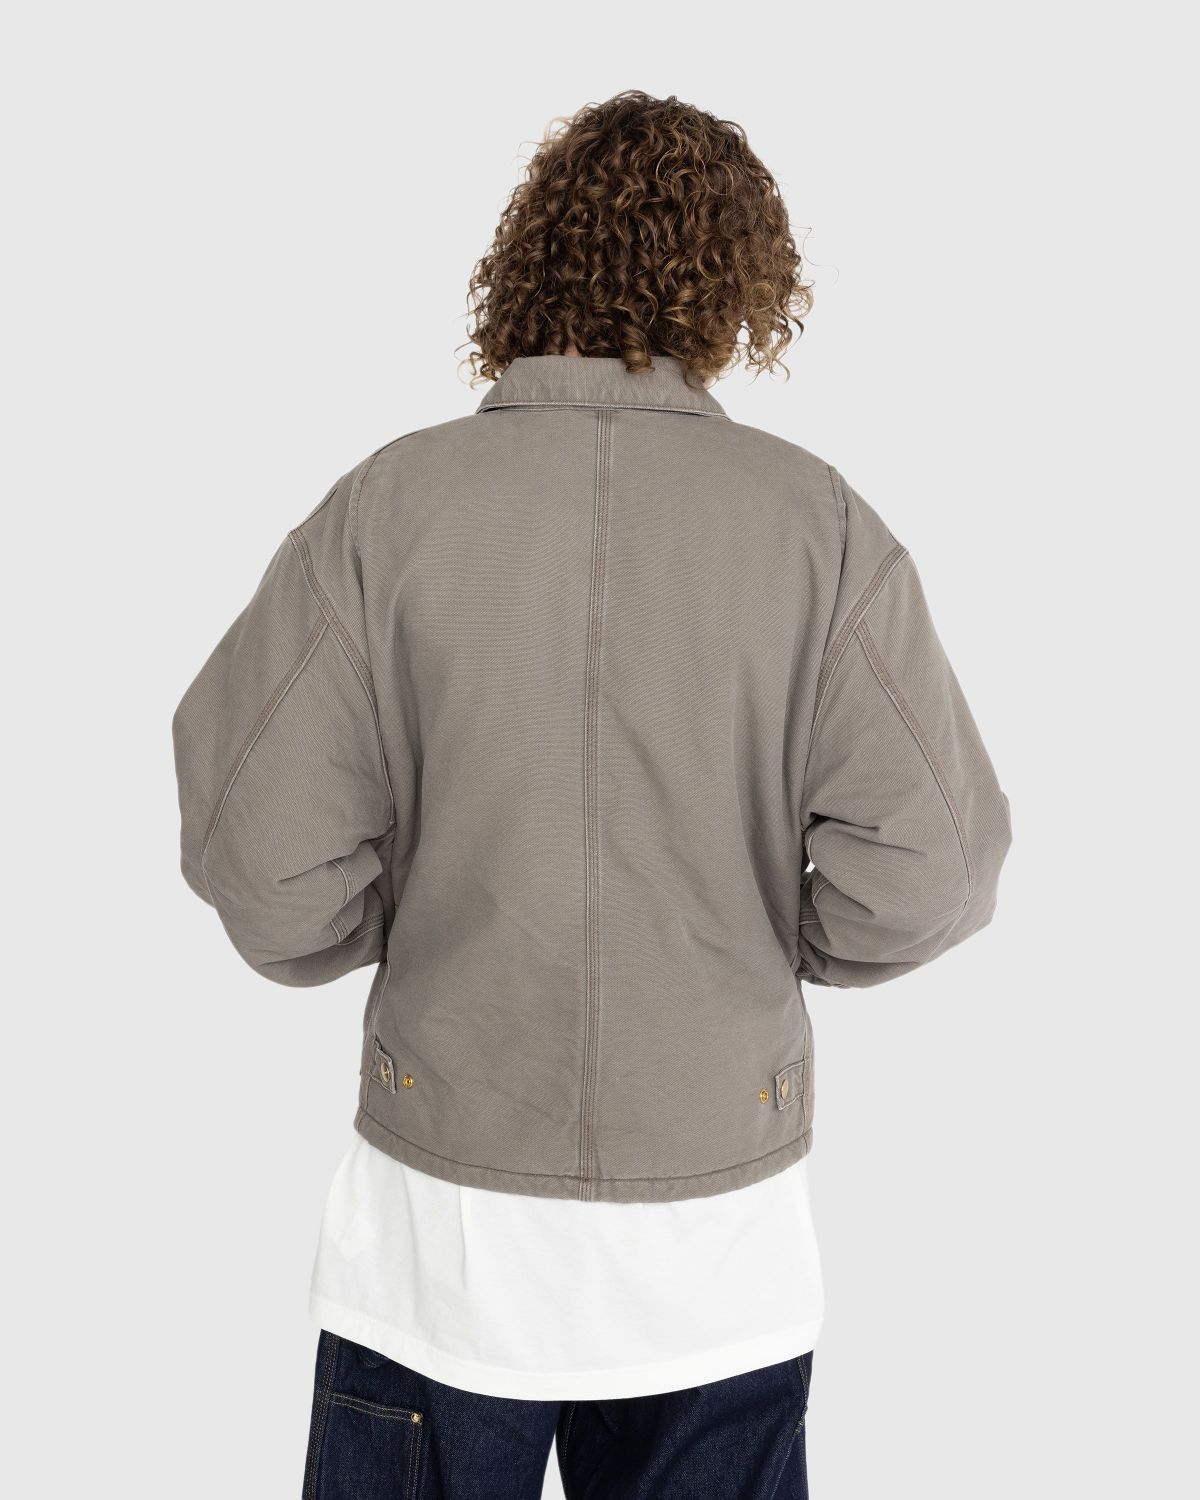 Carhartt WIP – OG Arcan Jacket Barista/Aged Canvas - Outerwear - Multi - Image 3